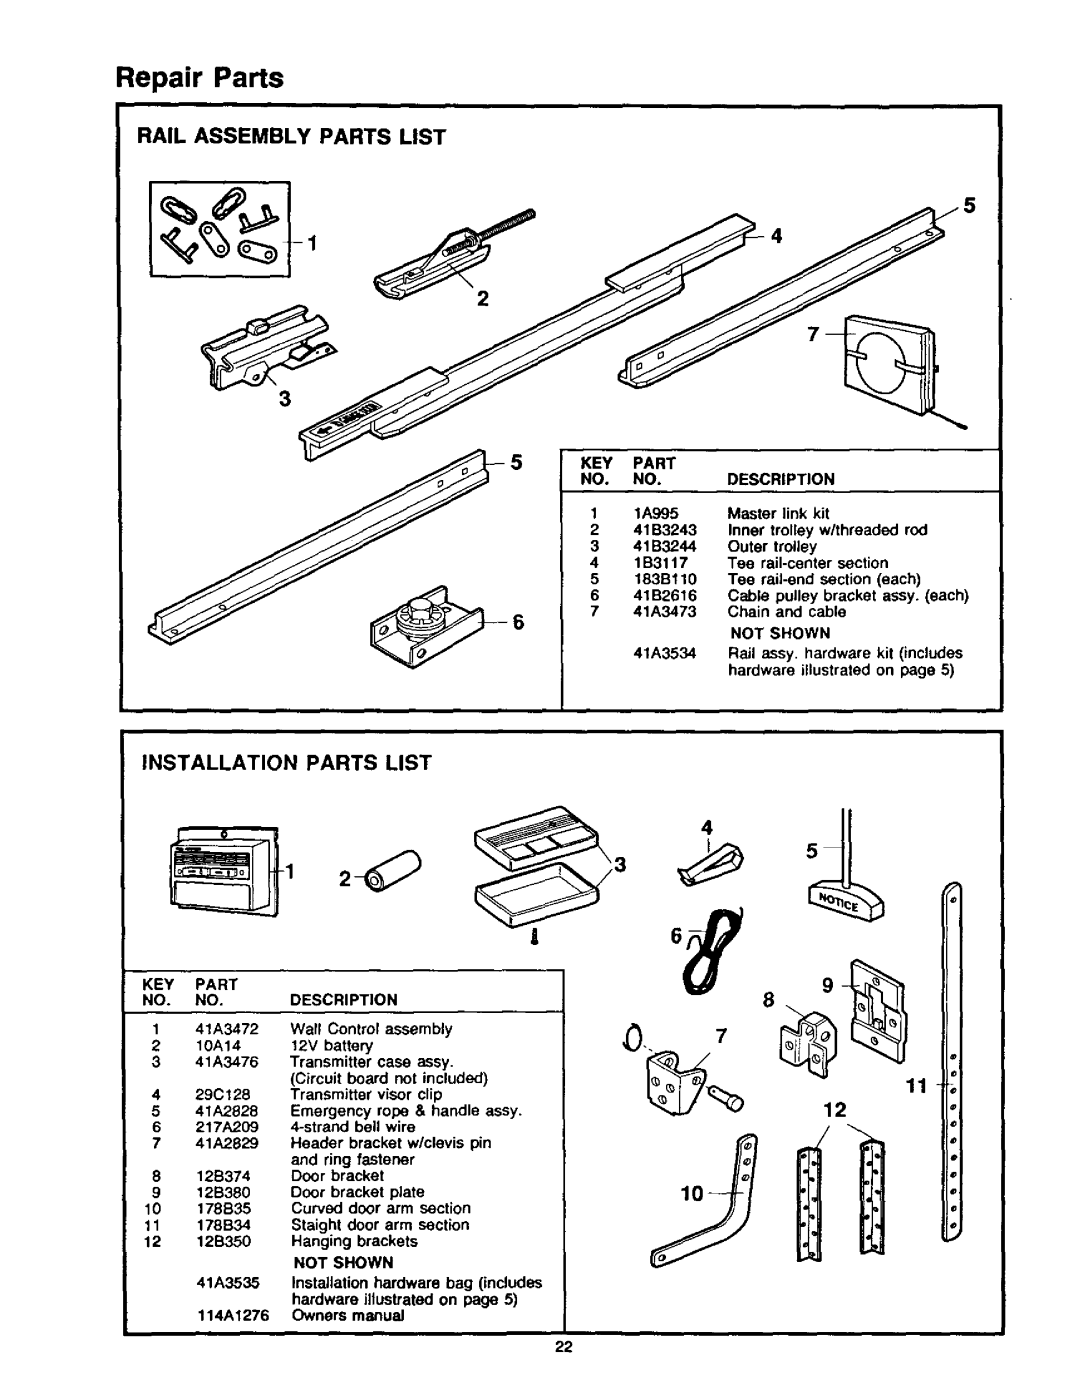 Craftsman 139.53515SR - I/2HP owner manual Repair Parts, Rail Assembly Parts List, Installation Parts List, Description 